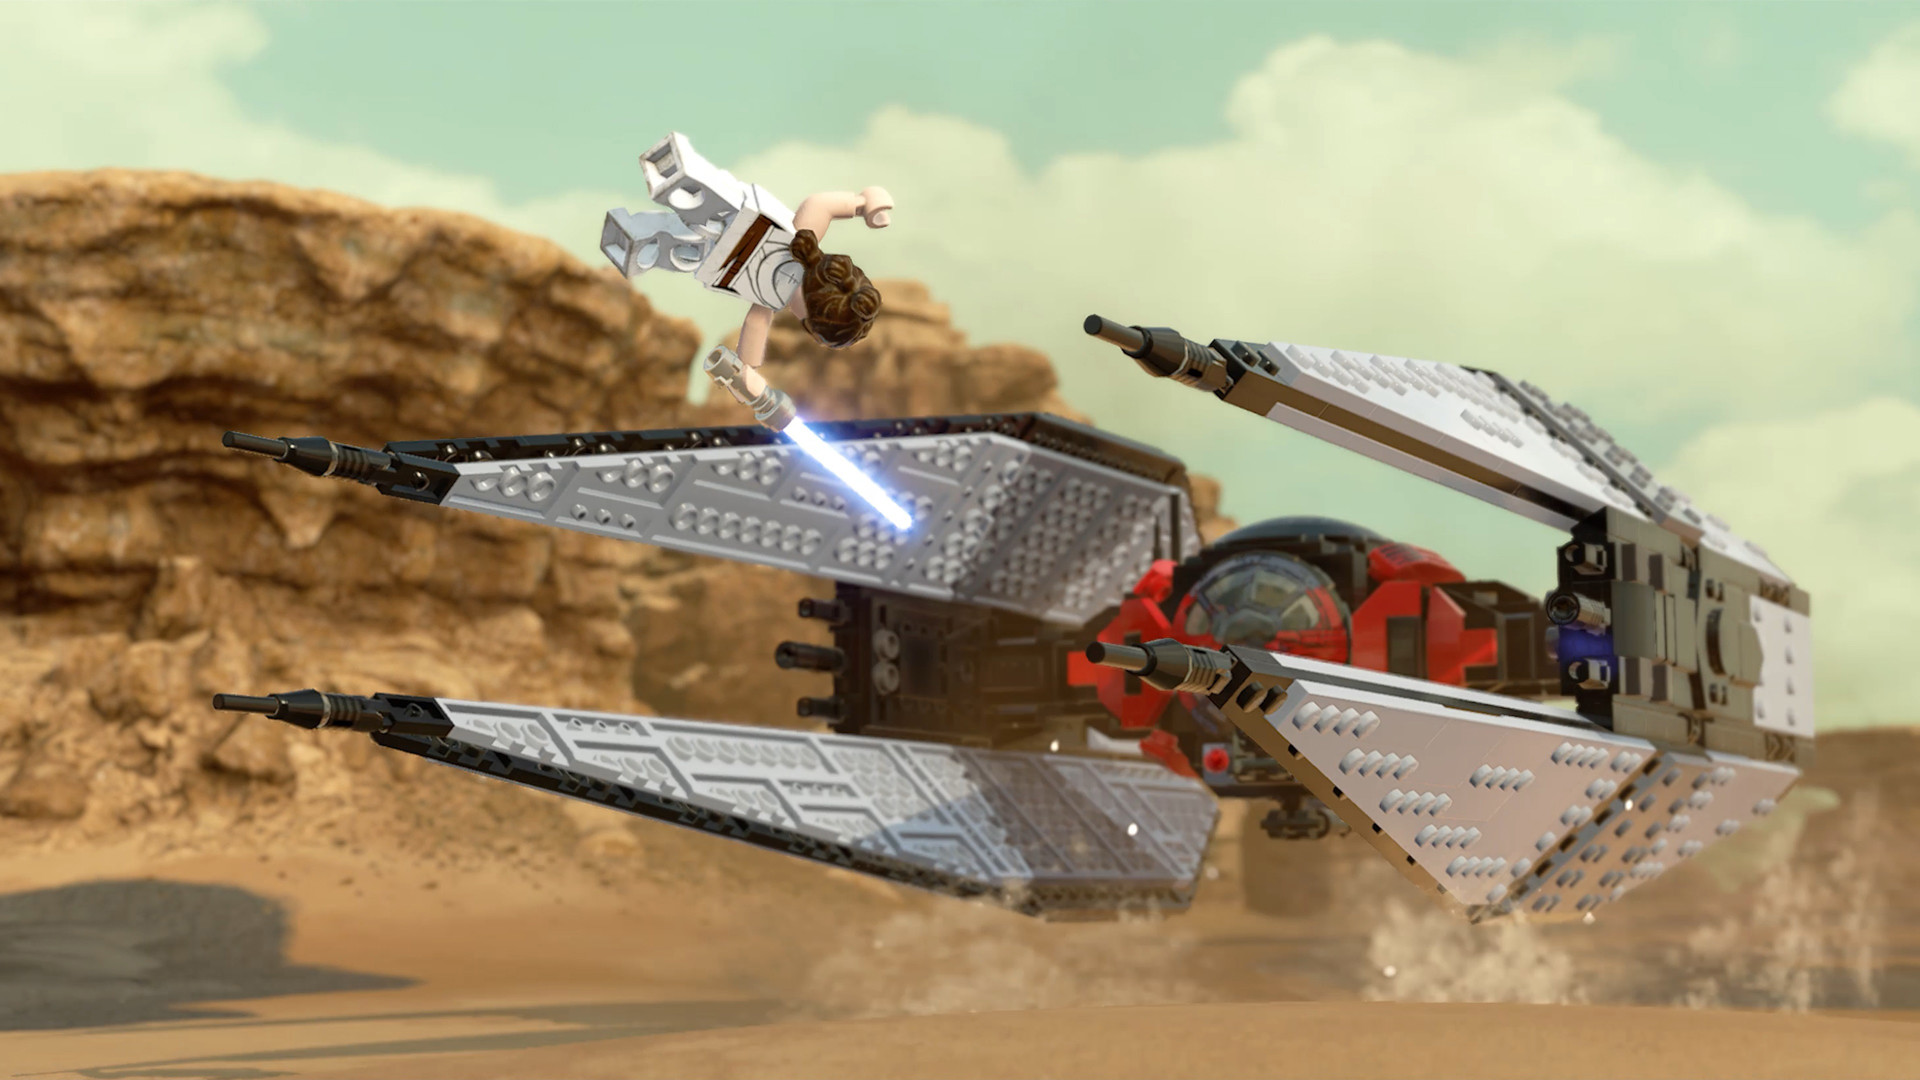 LEGO Star Wars: The Skywalker Saga - Character Collection 1&2 Pack DLC EU PS4 CD Key